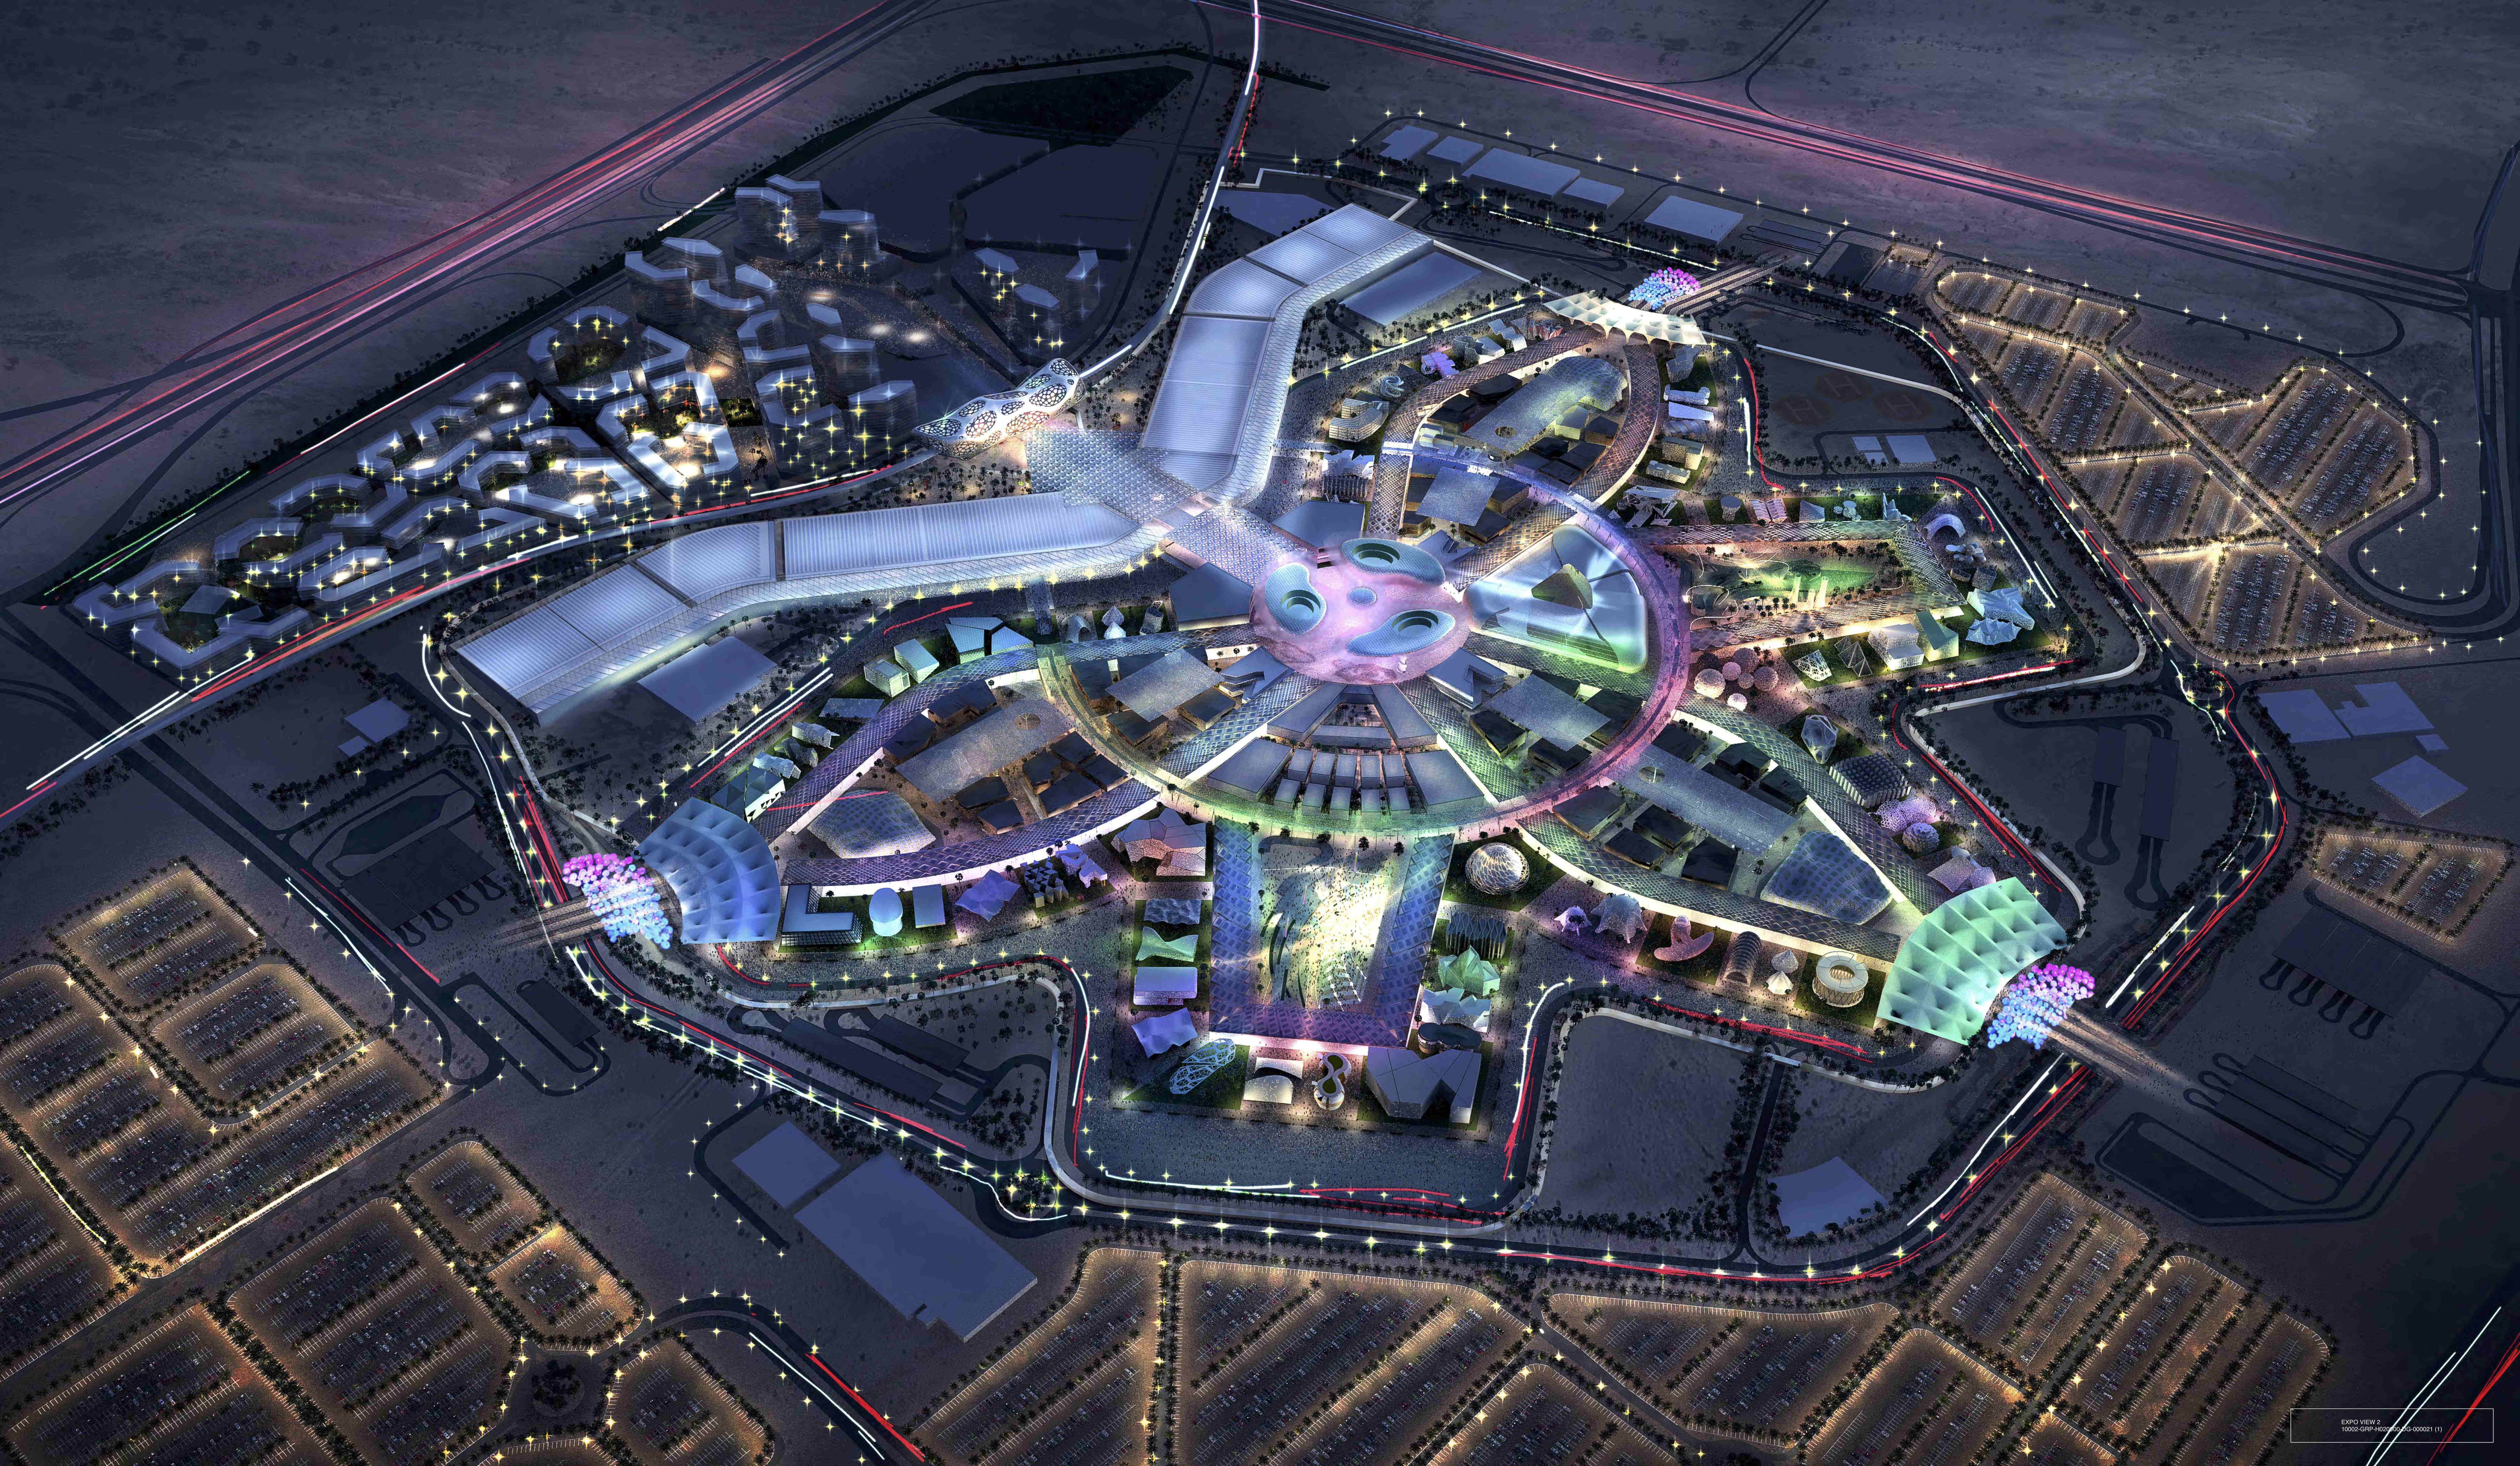 Expo 2020 Dubai Reveals its Master Plan at Arab Media Forum 2016